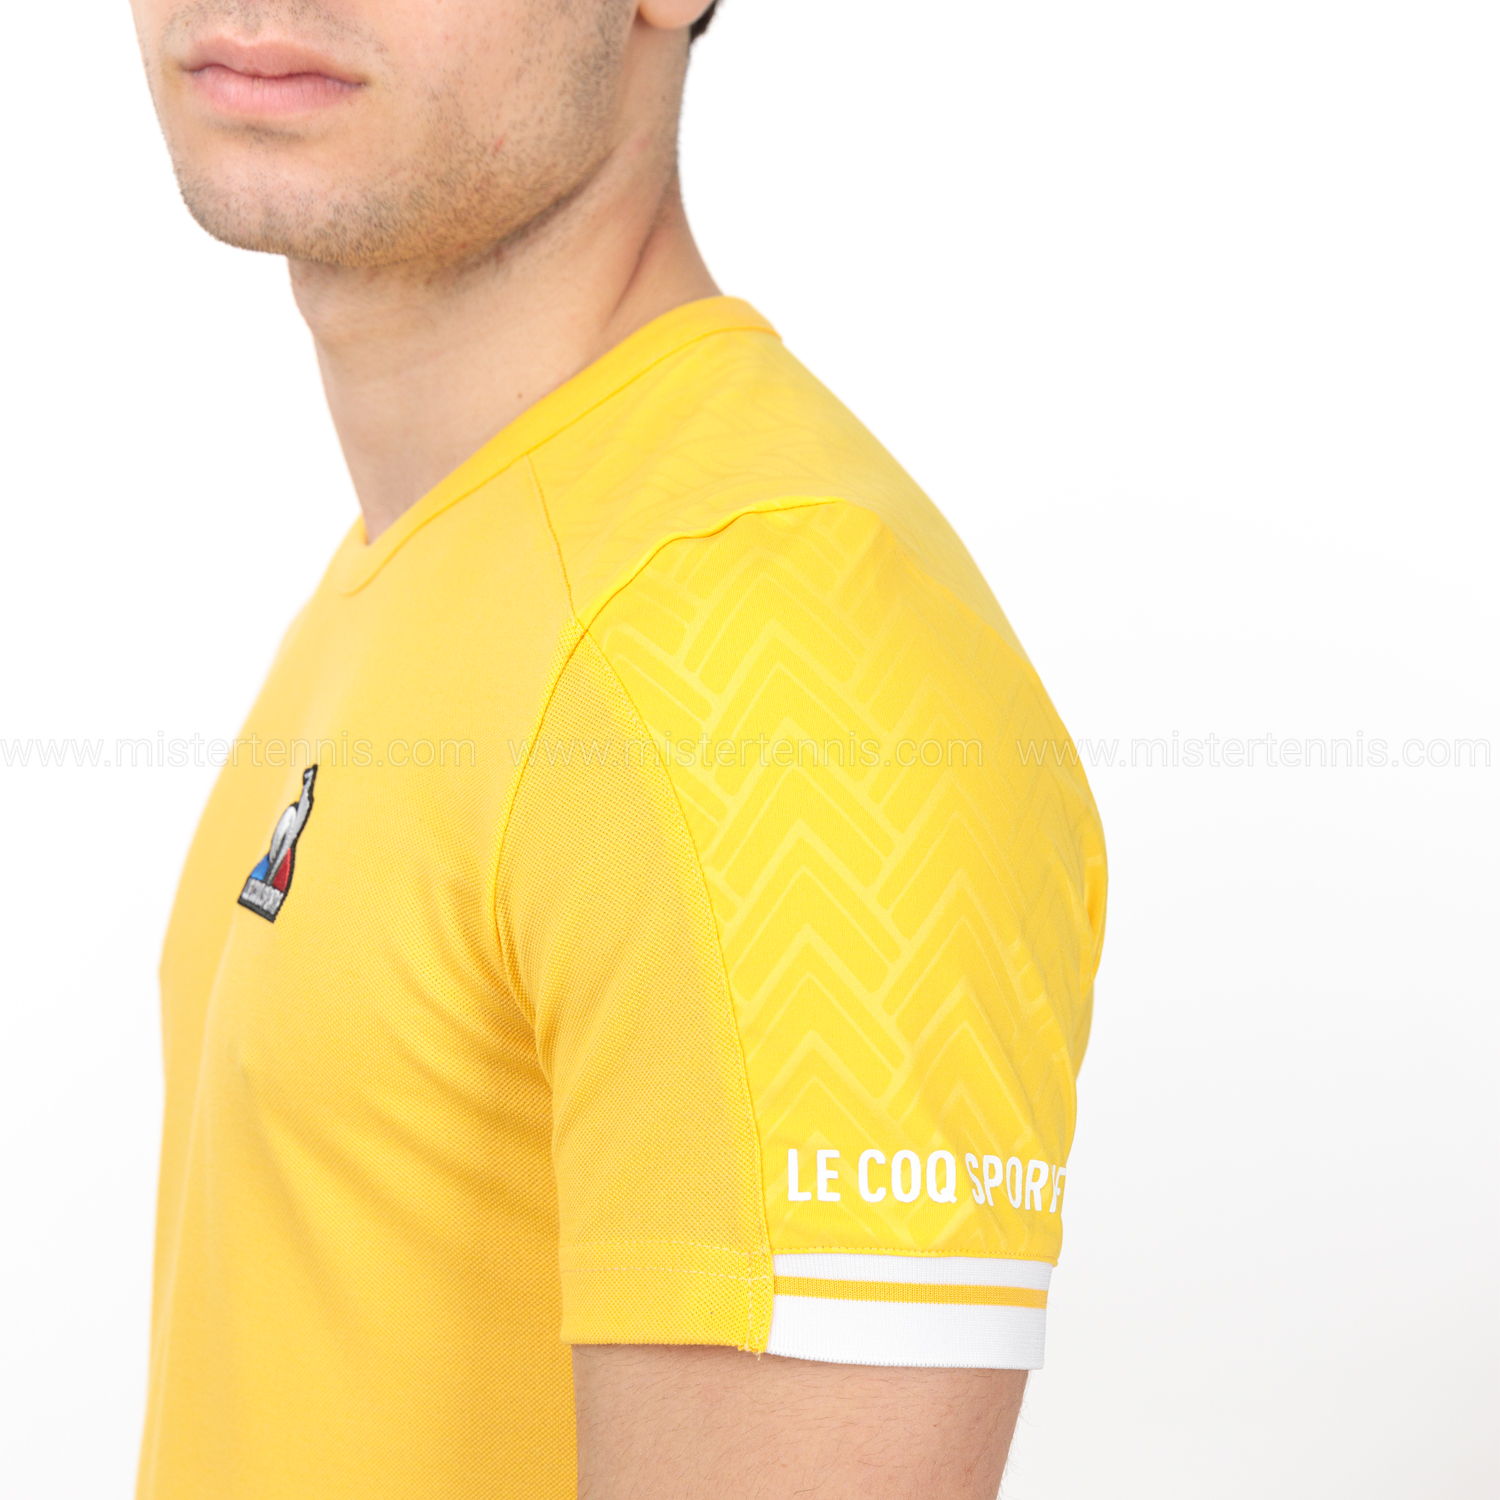 Le Coq Sportif Performance Match Camiseta - Lemon Chrome